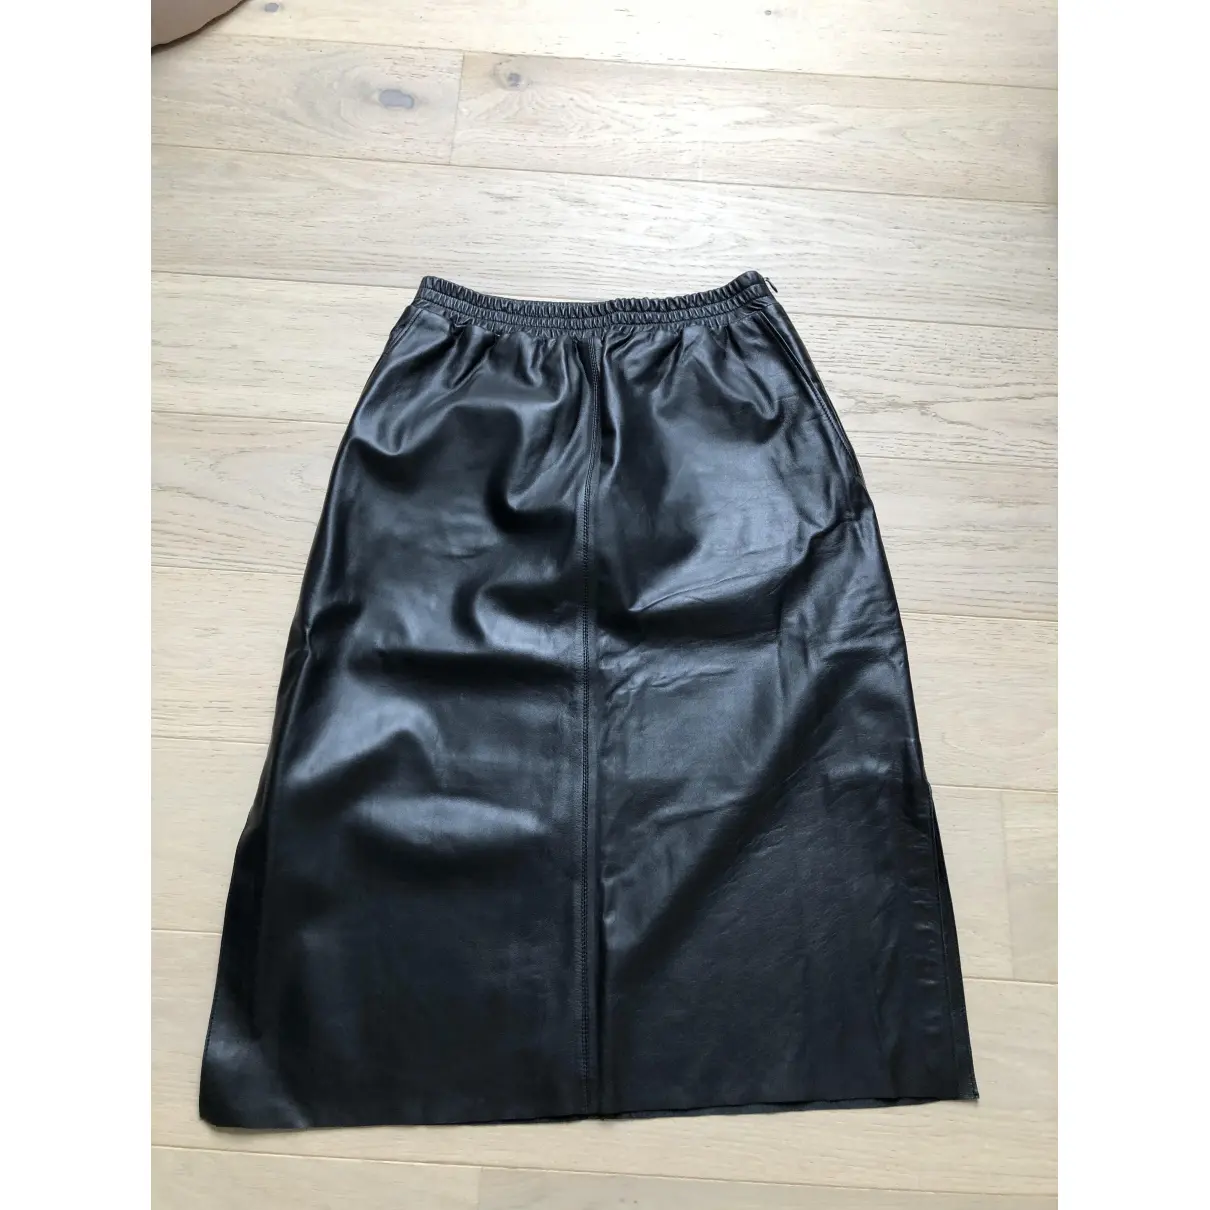 Buy Fallwinterspringsummer Leather mid-length skirt online